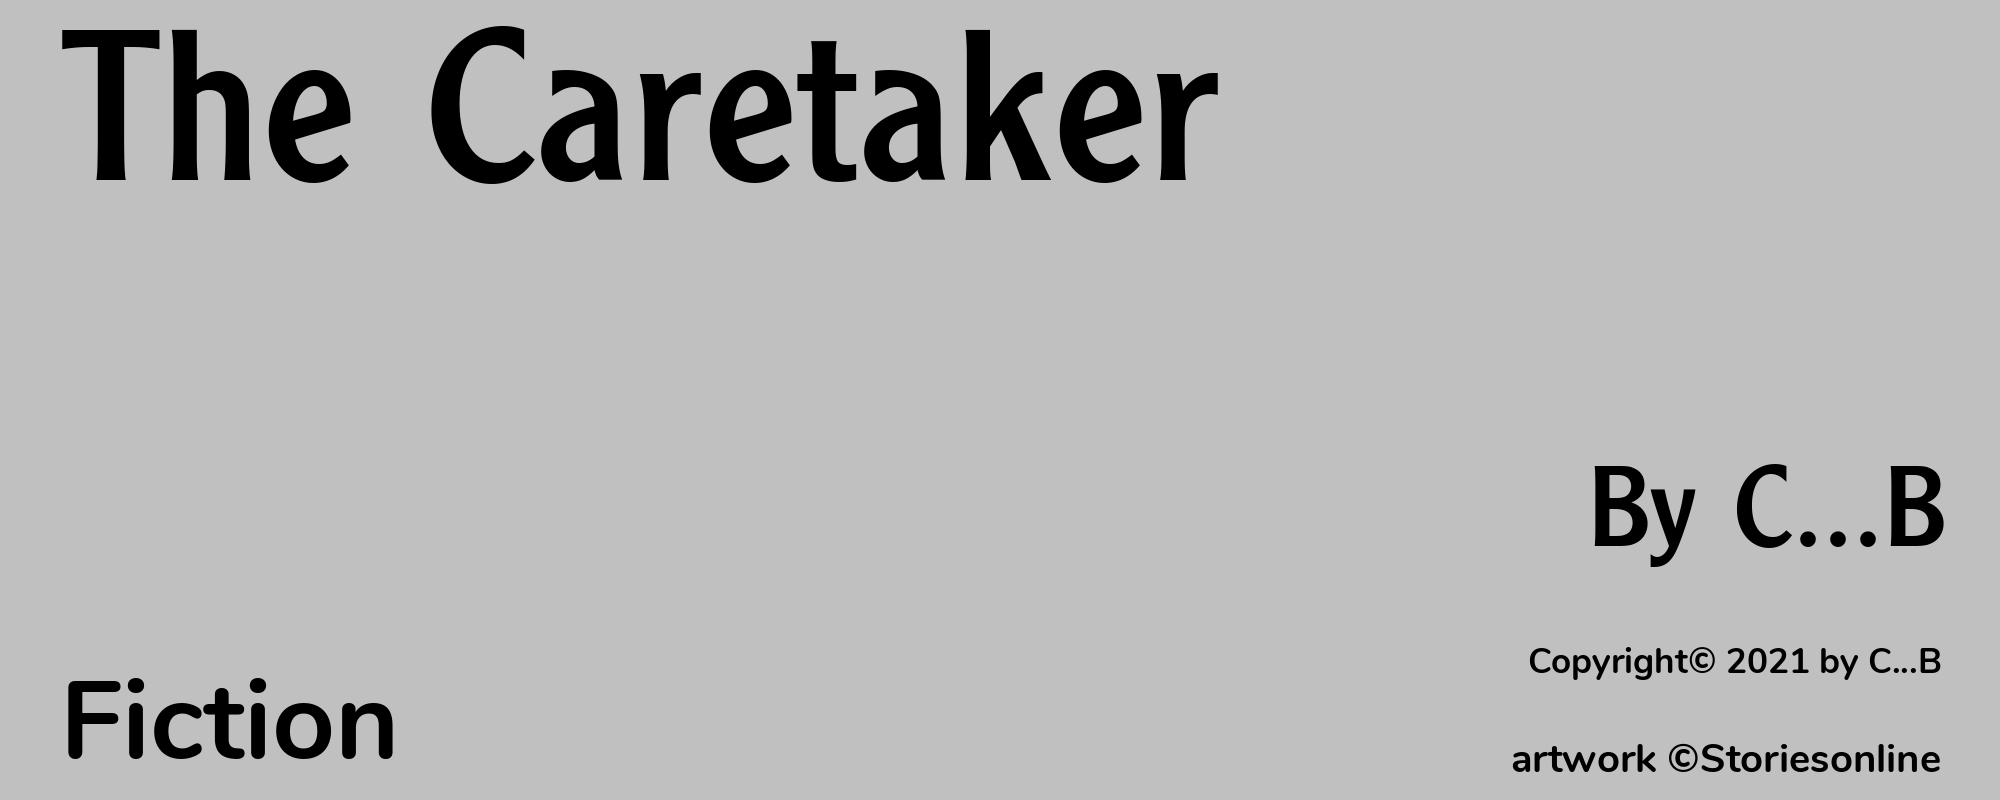 The Caretaker - Cover